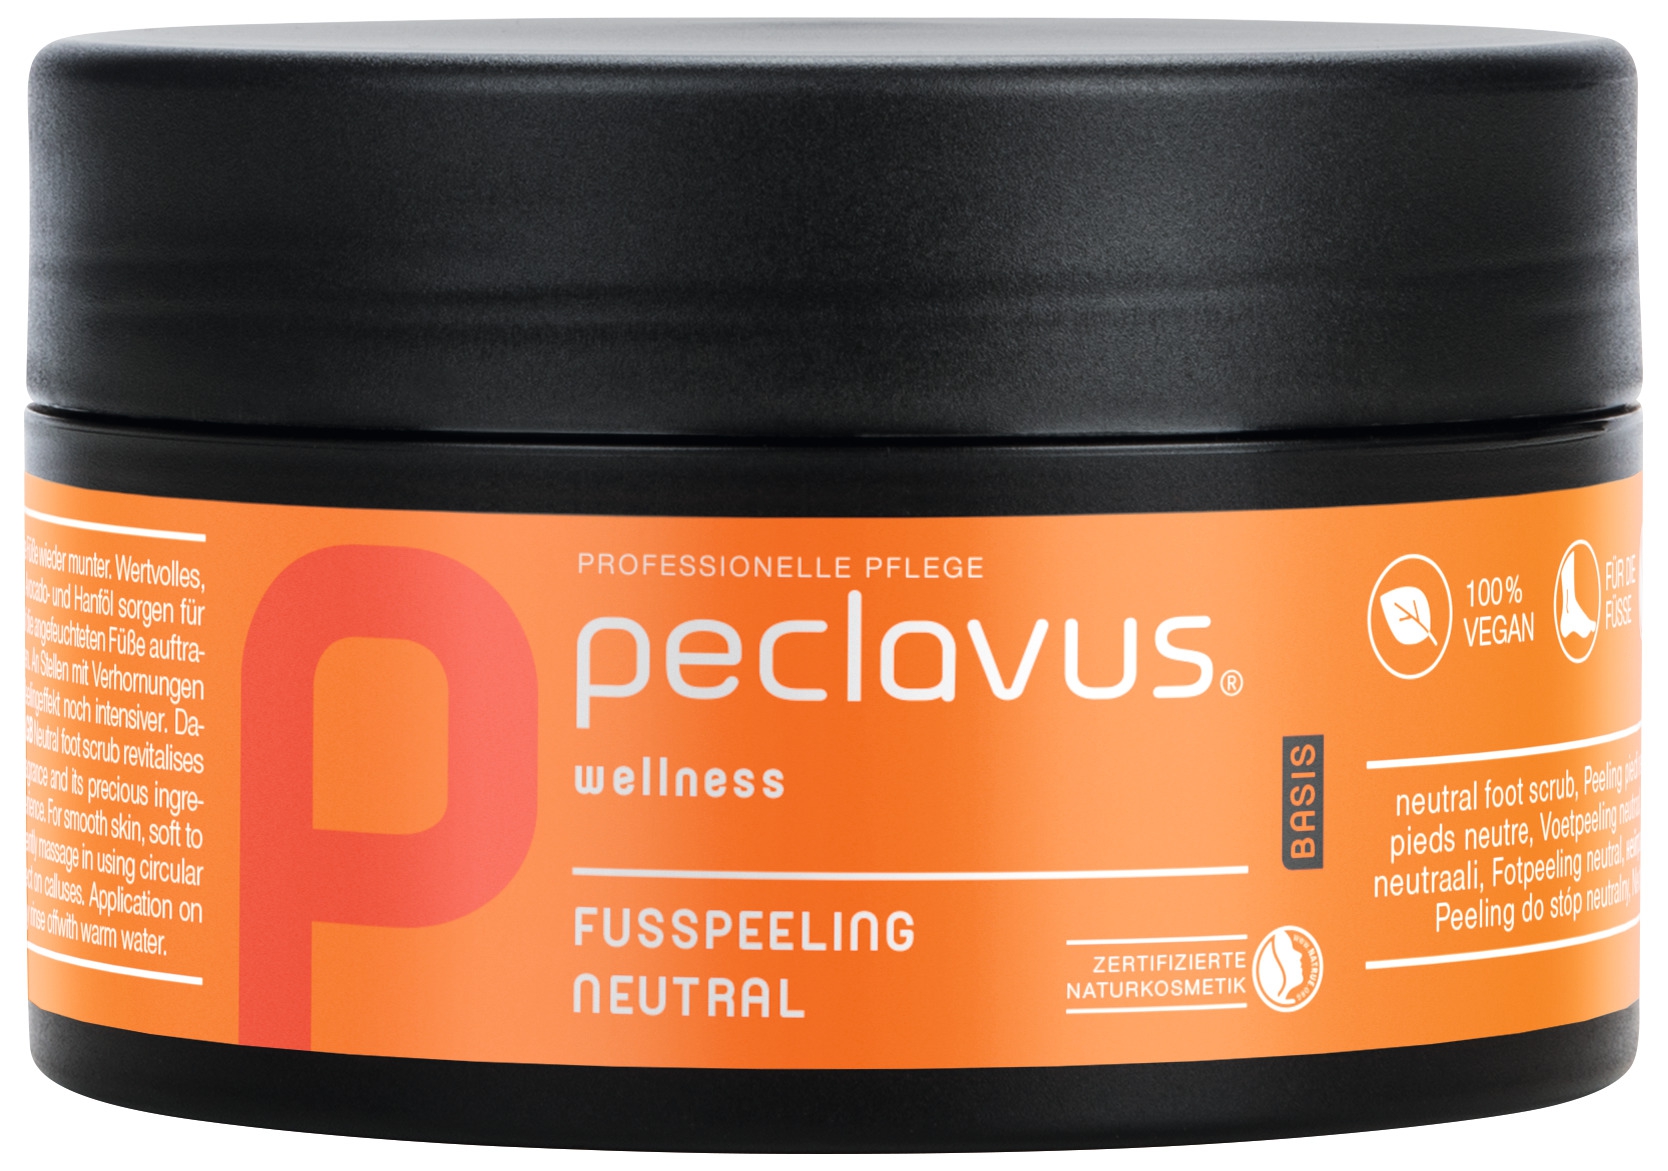 PECLAVUS wellness Fusspeeling Neutral | Basis 300 g